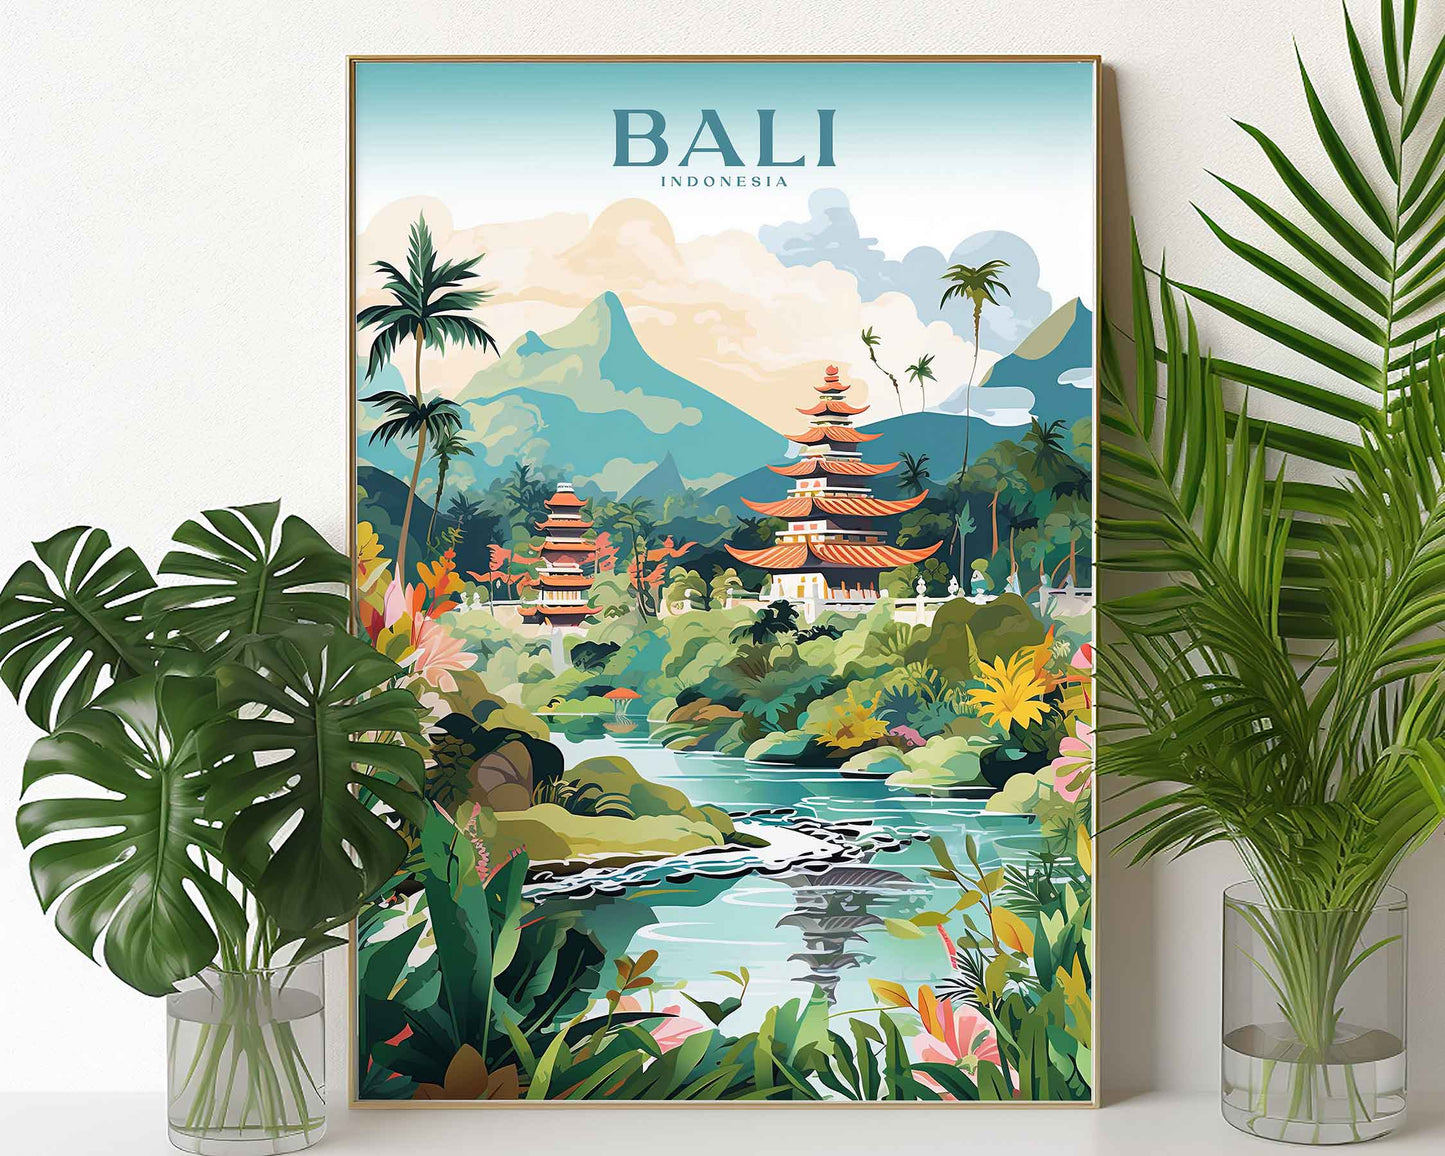 Framed Image of Bali Indonesia Travel Poster Illustration Prints Wall Art